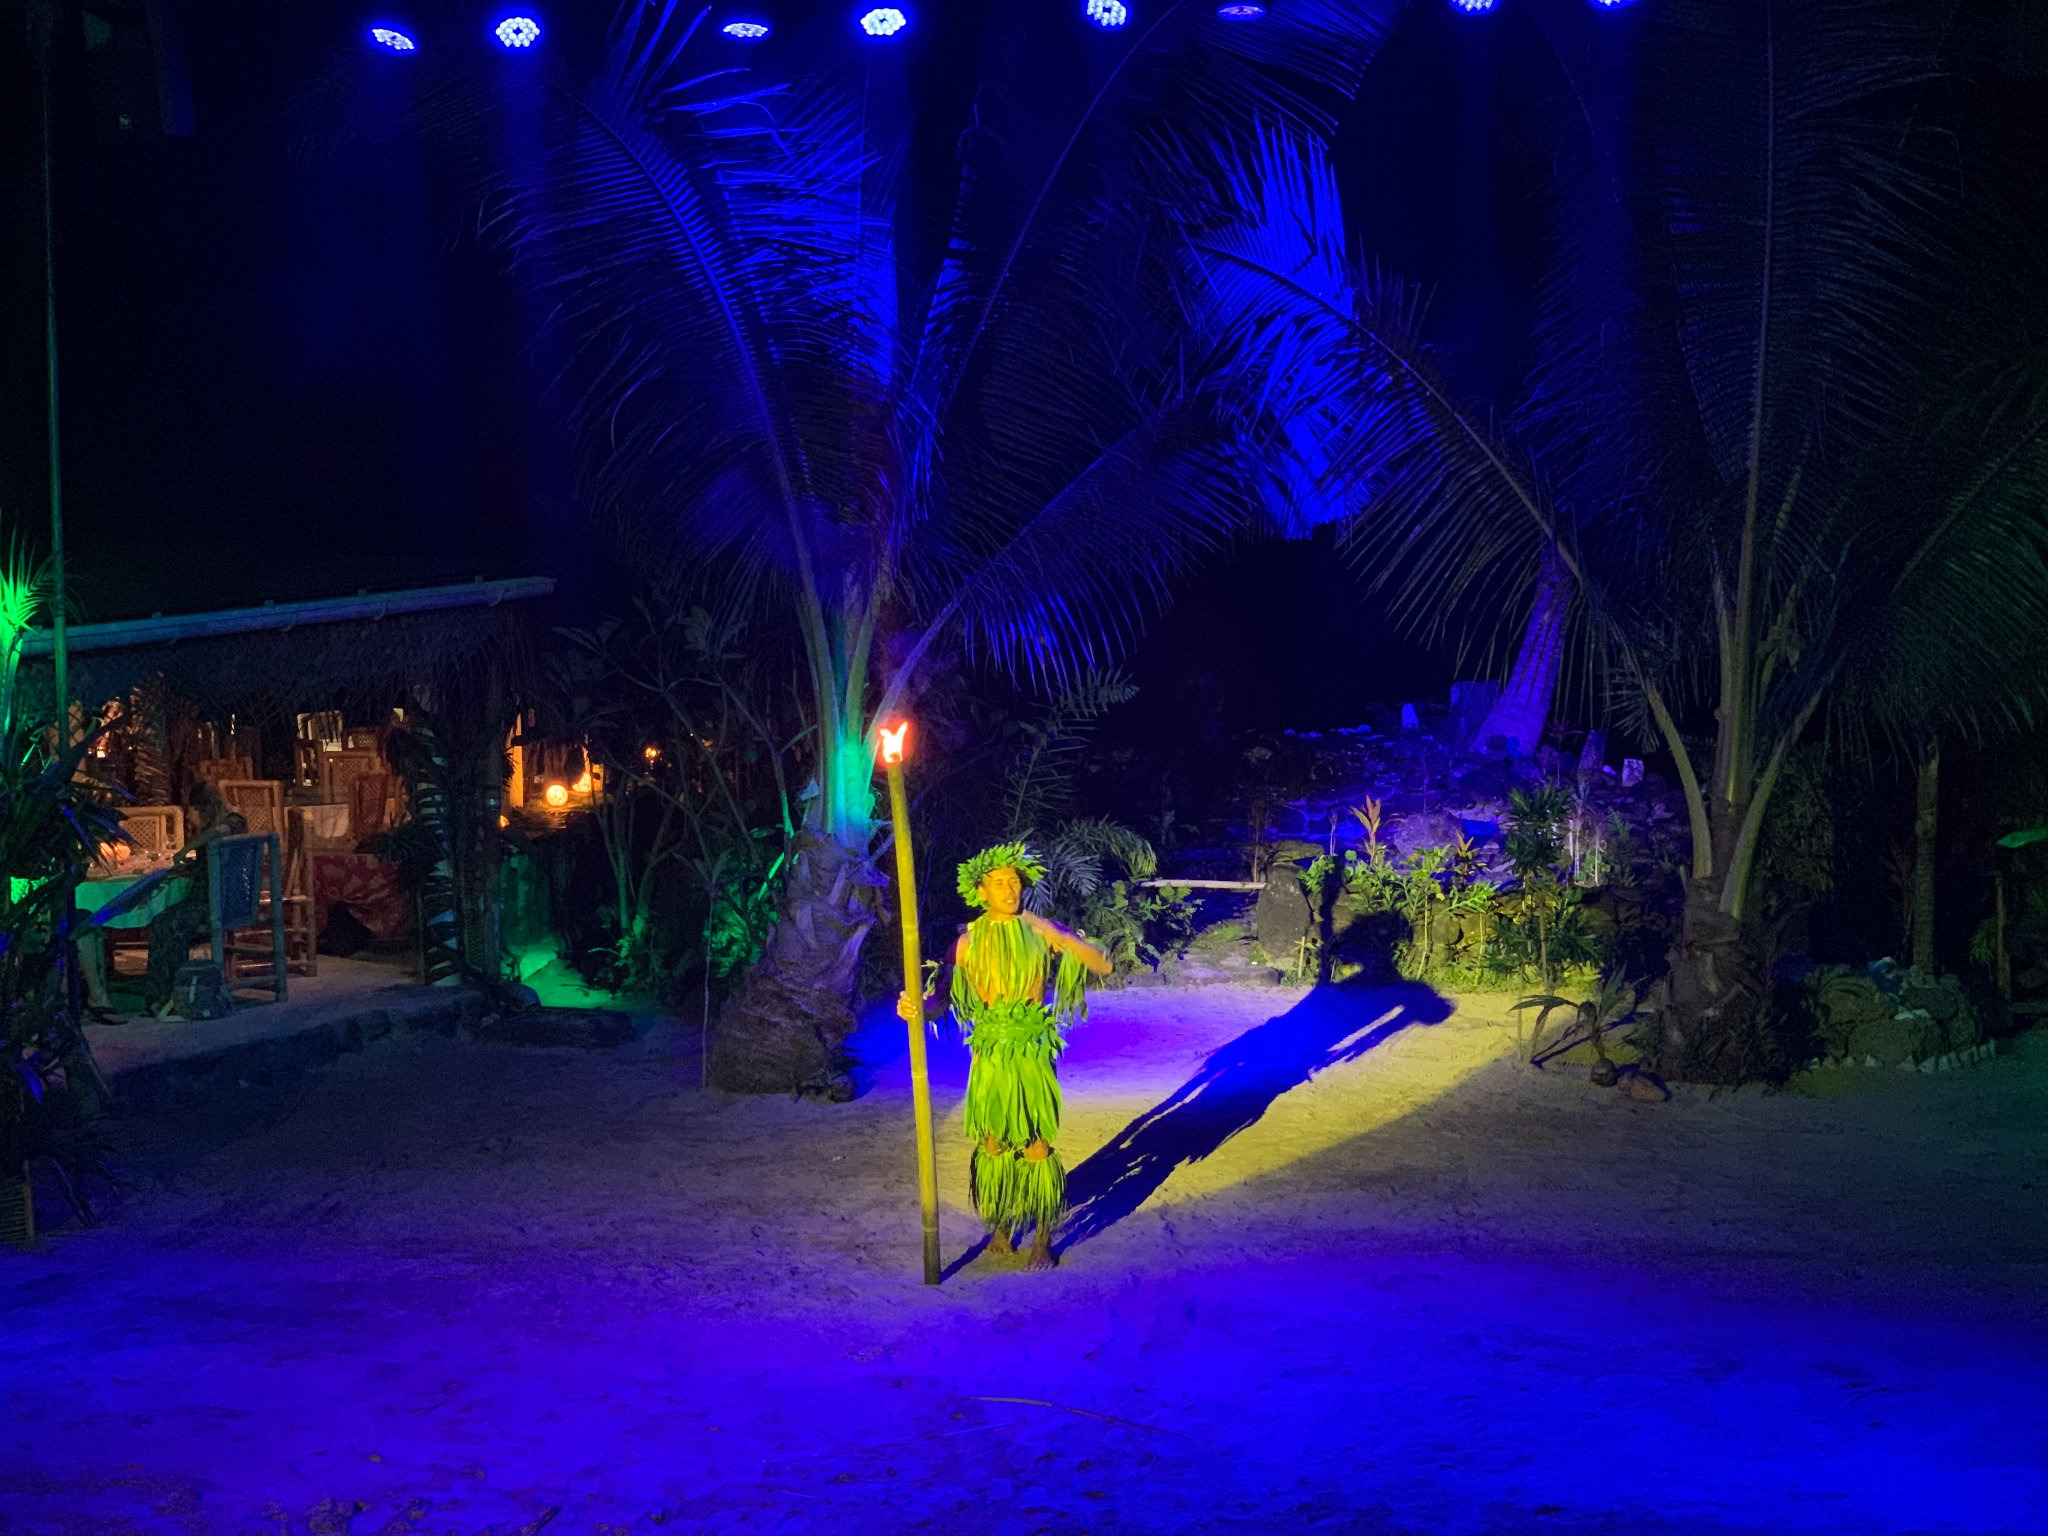 We just watched a Heiva dance presentation in Bora Bora